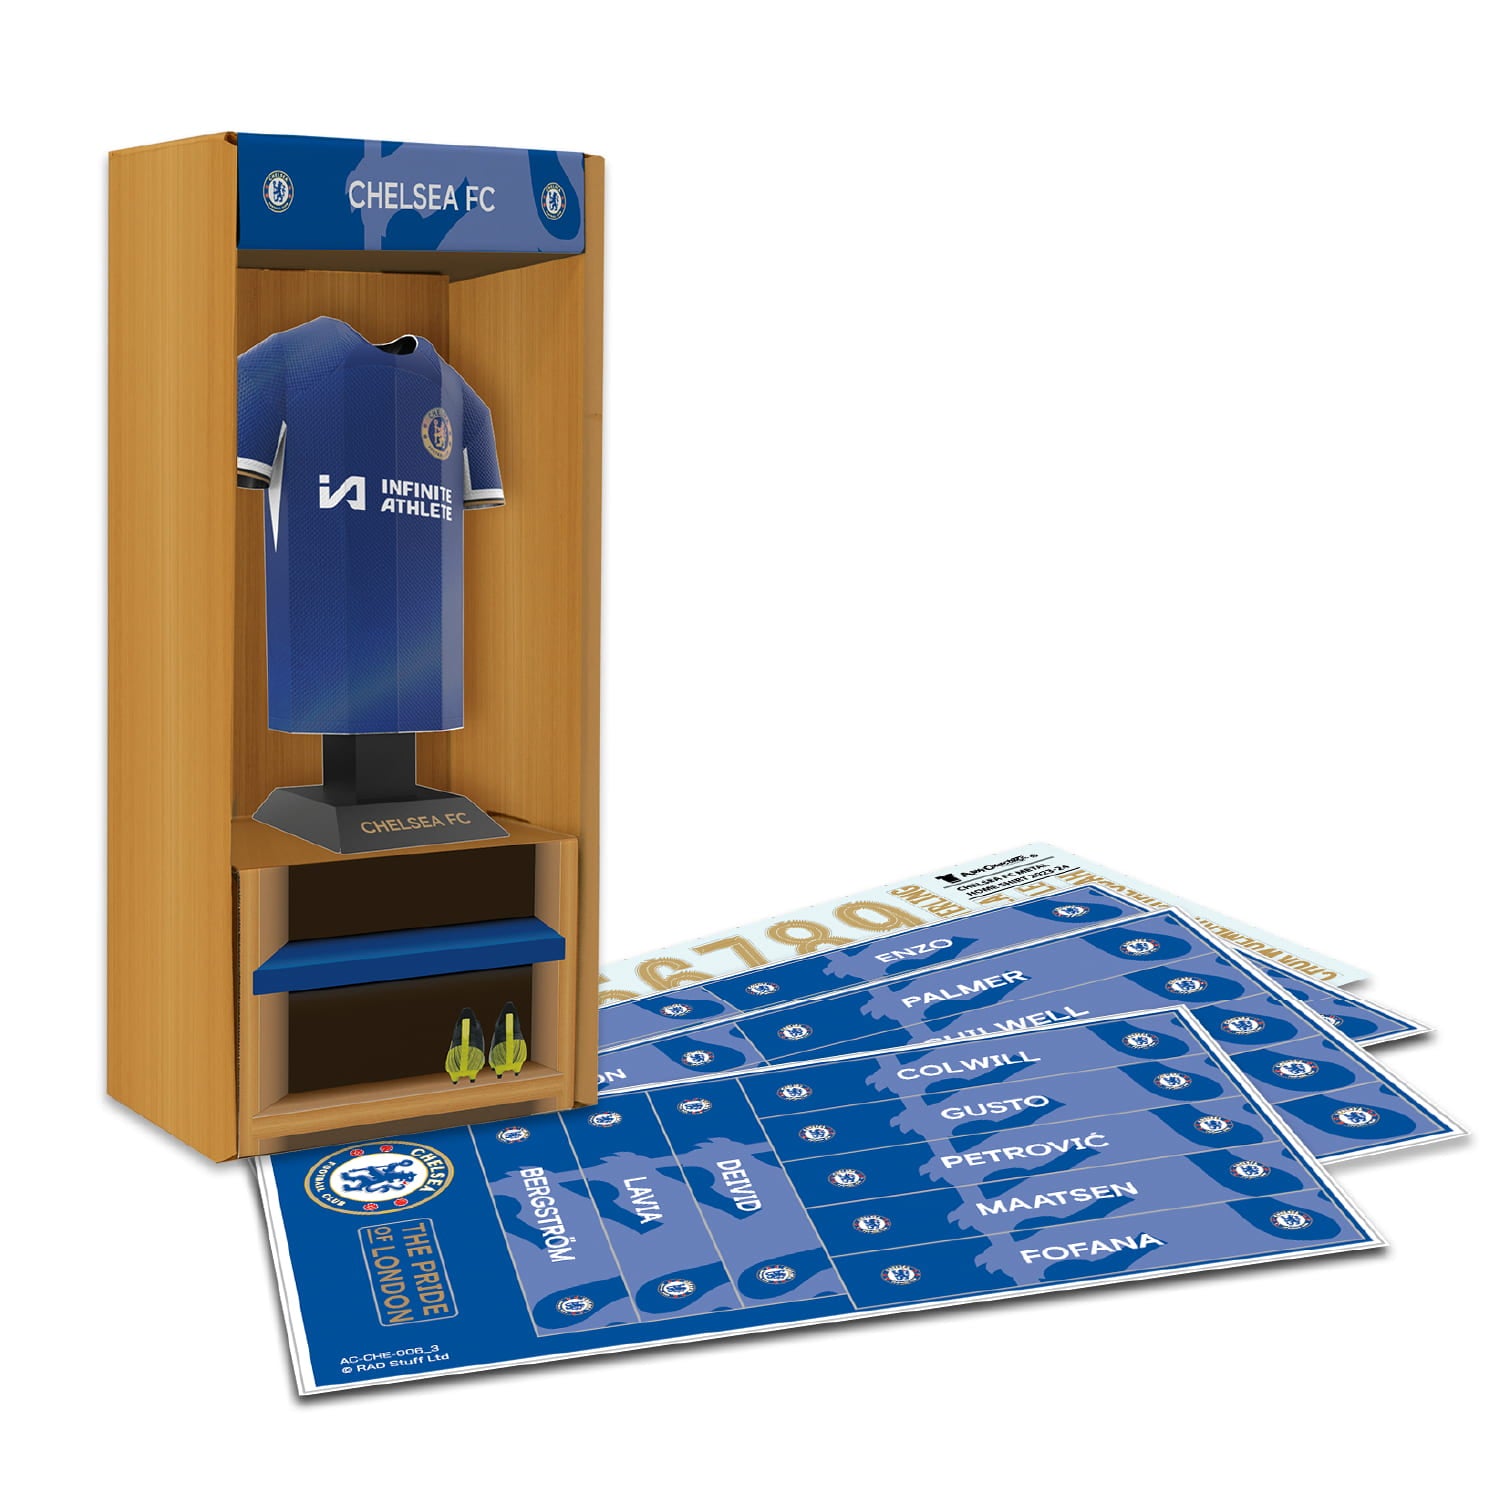 Chelsea home kit with locker display